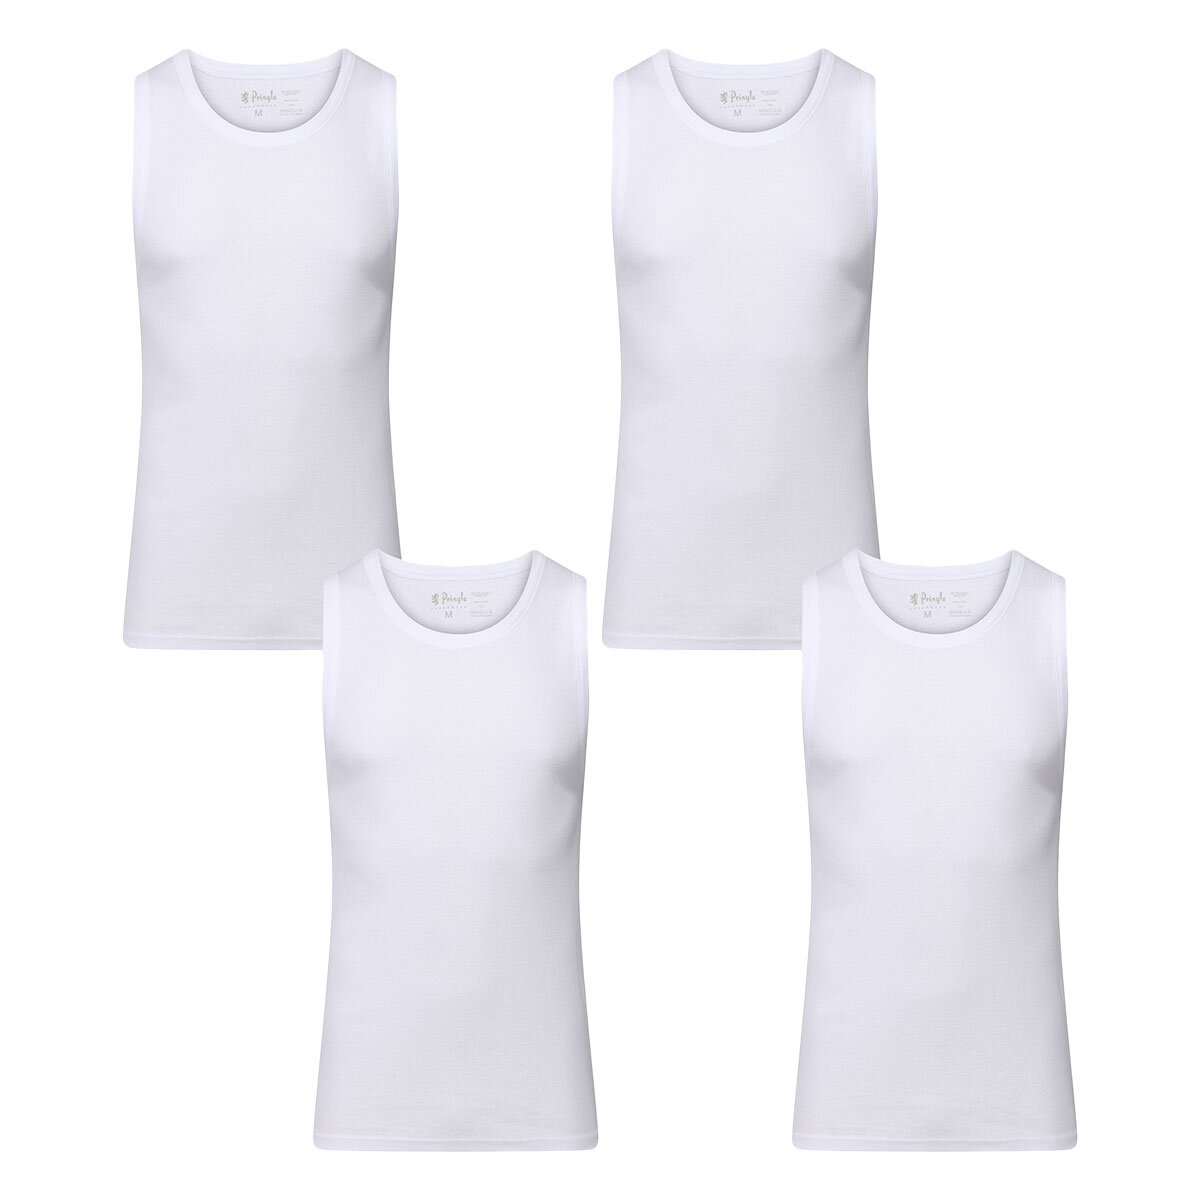 Men's Vests & Tank Tops, Plain, White & Ribbed Vests